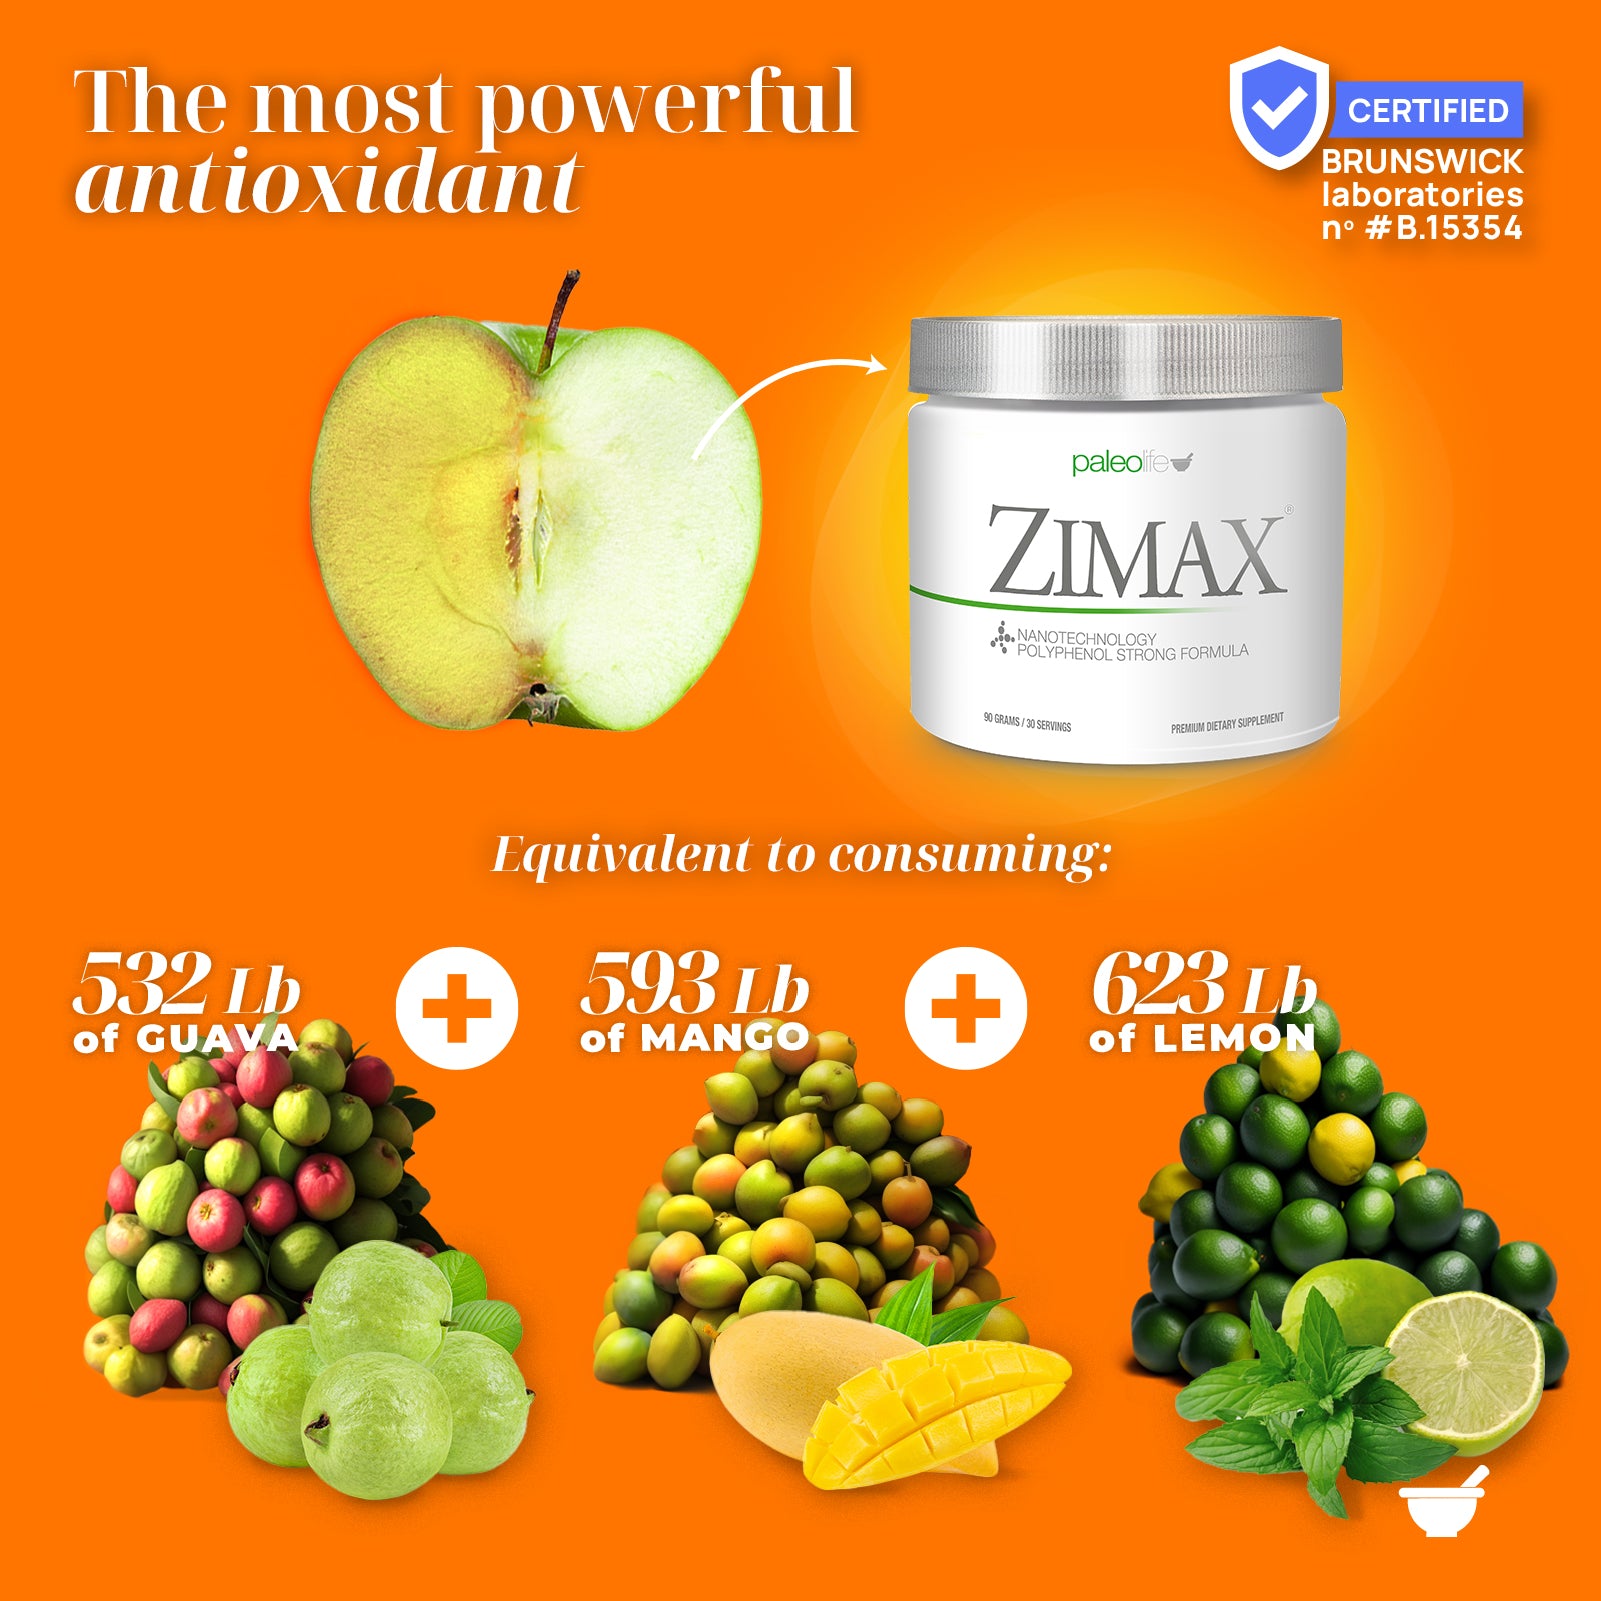 ZIMAX® Antioxidant and Anti-inflammatory Canister